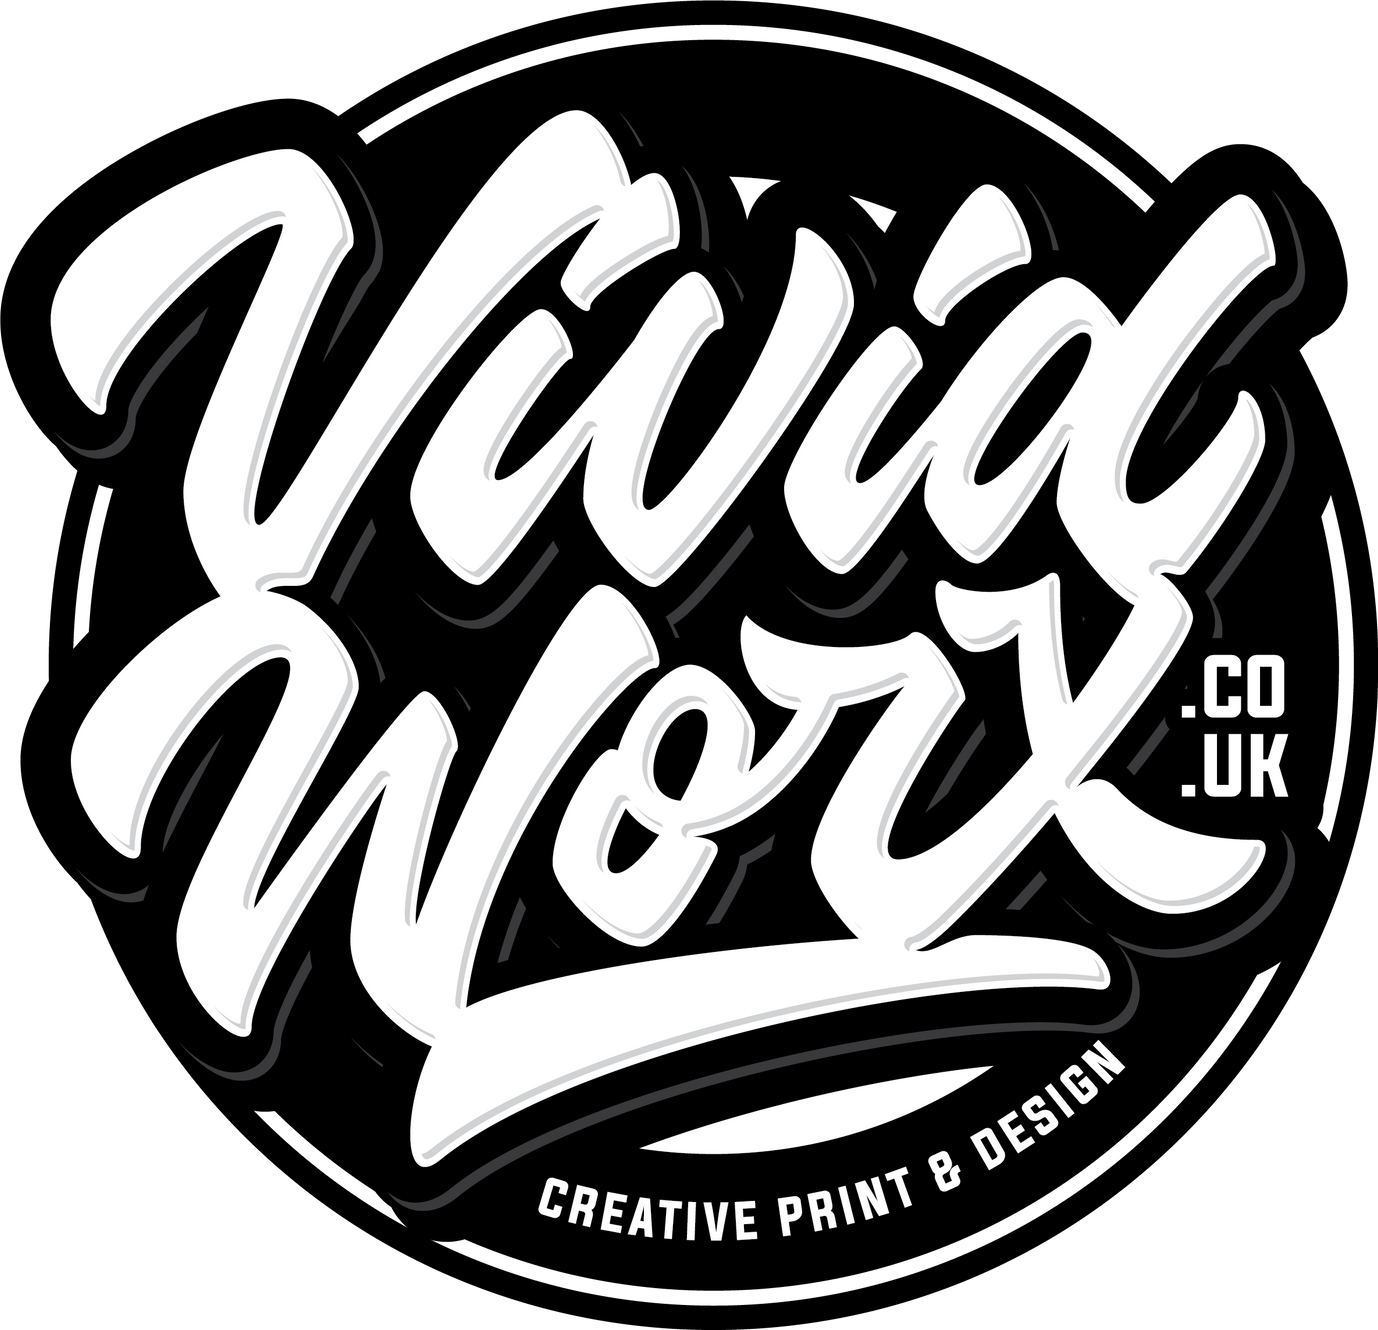 www.vividworx.co.uk